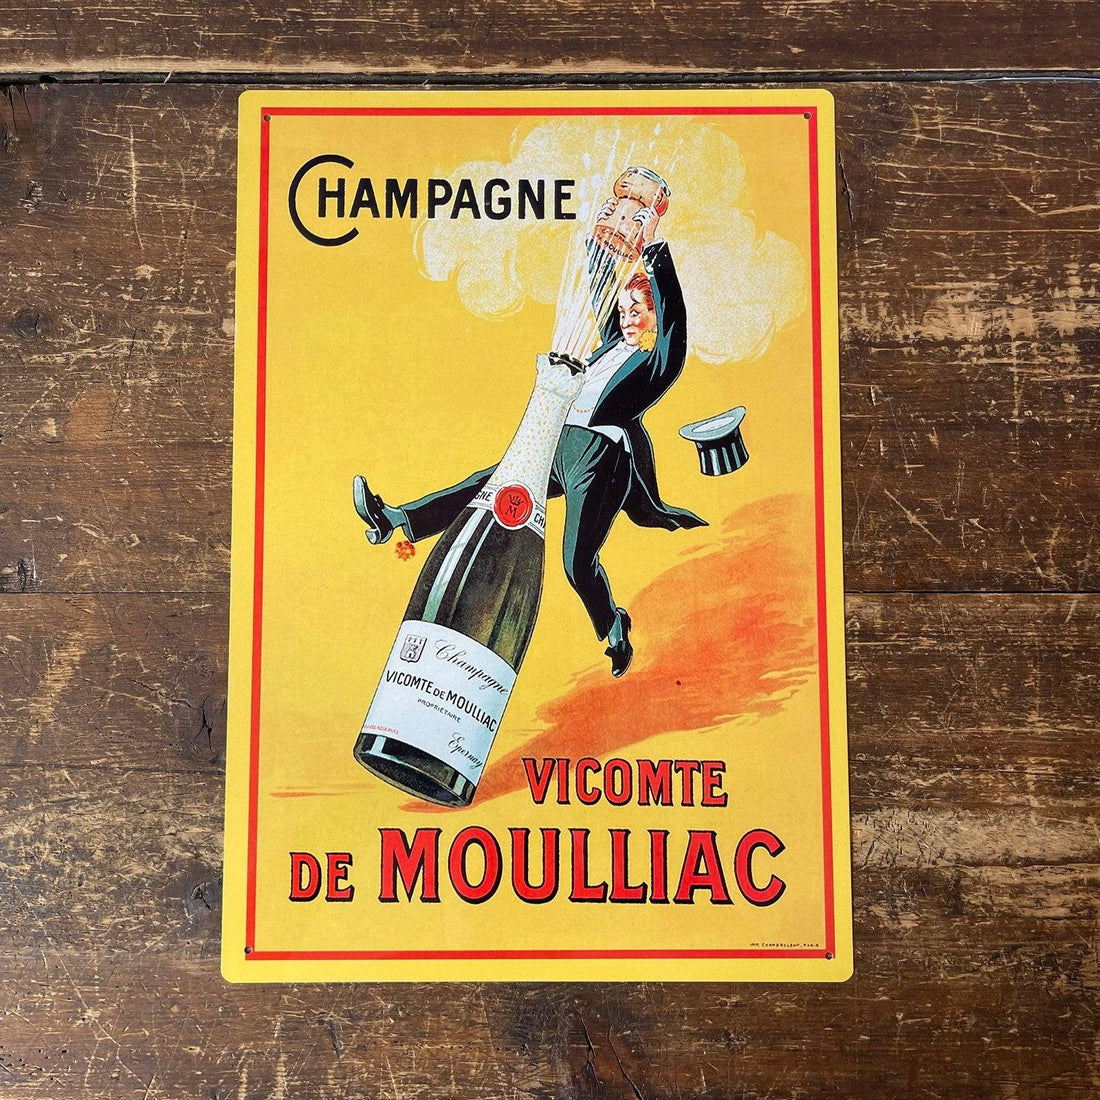 Vintage Metal Sign - Retro Advertising Champagne Vicomte De Moulliac Sign - £27.99 - Metal Sign 